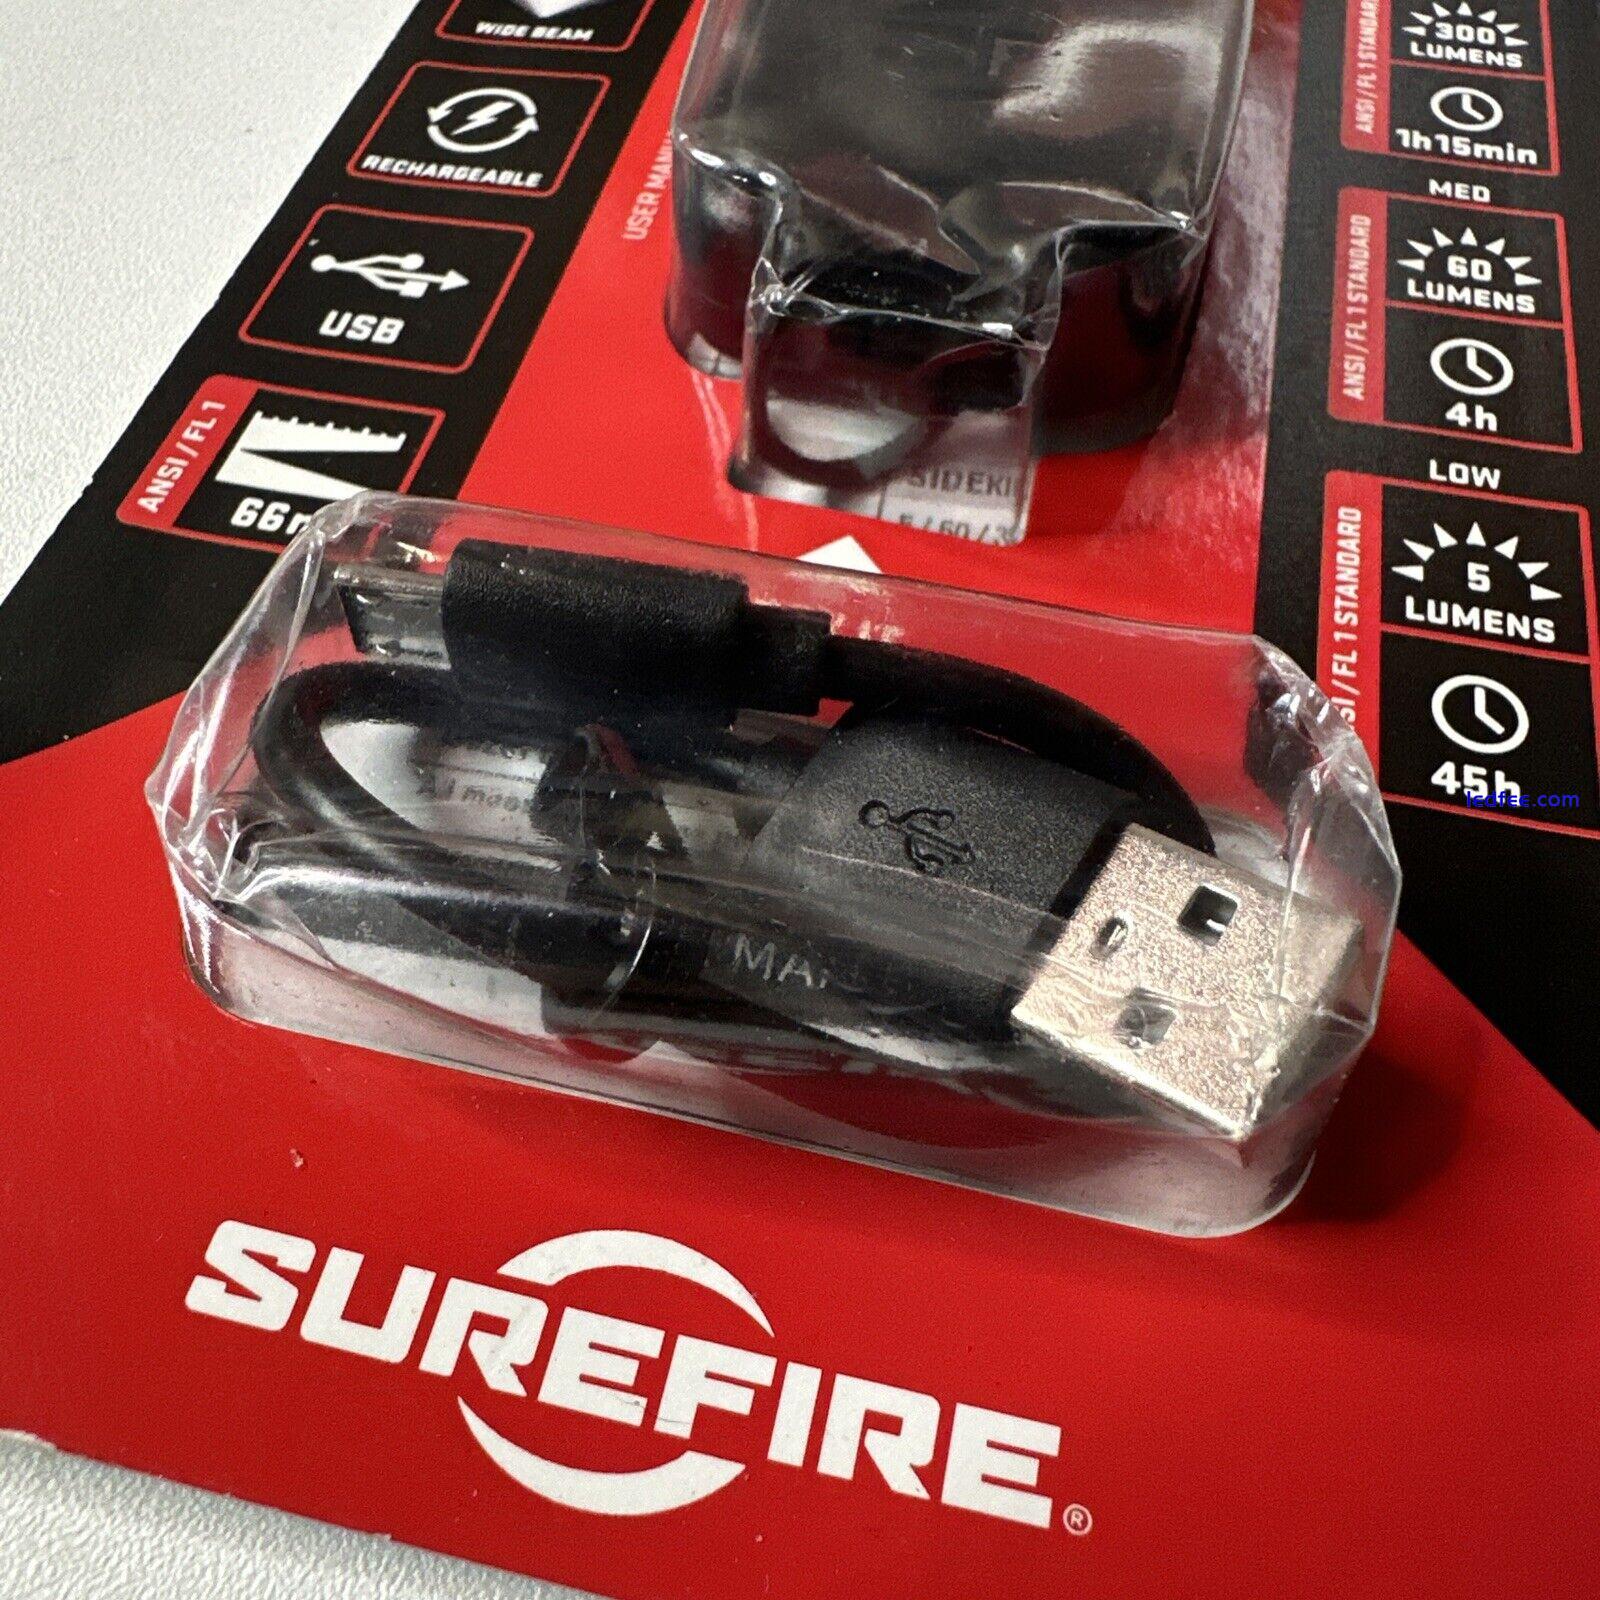 SureFire Sidekick Ultra LED Compact Triple Output Keychain Light - RECHARGEABLE 0 